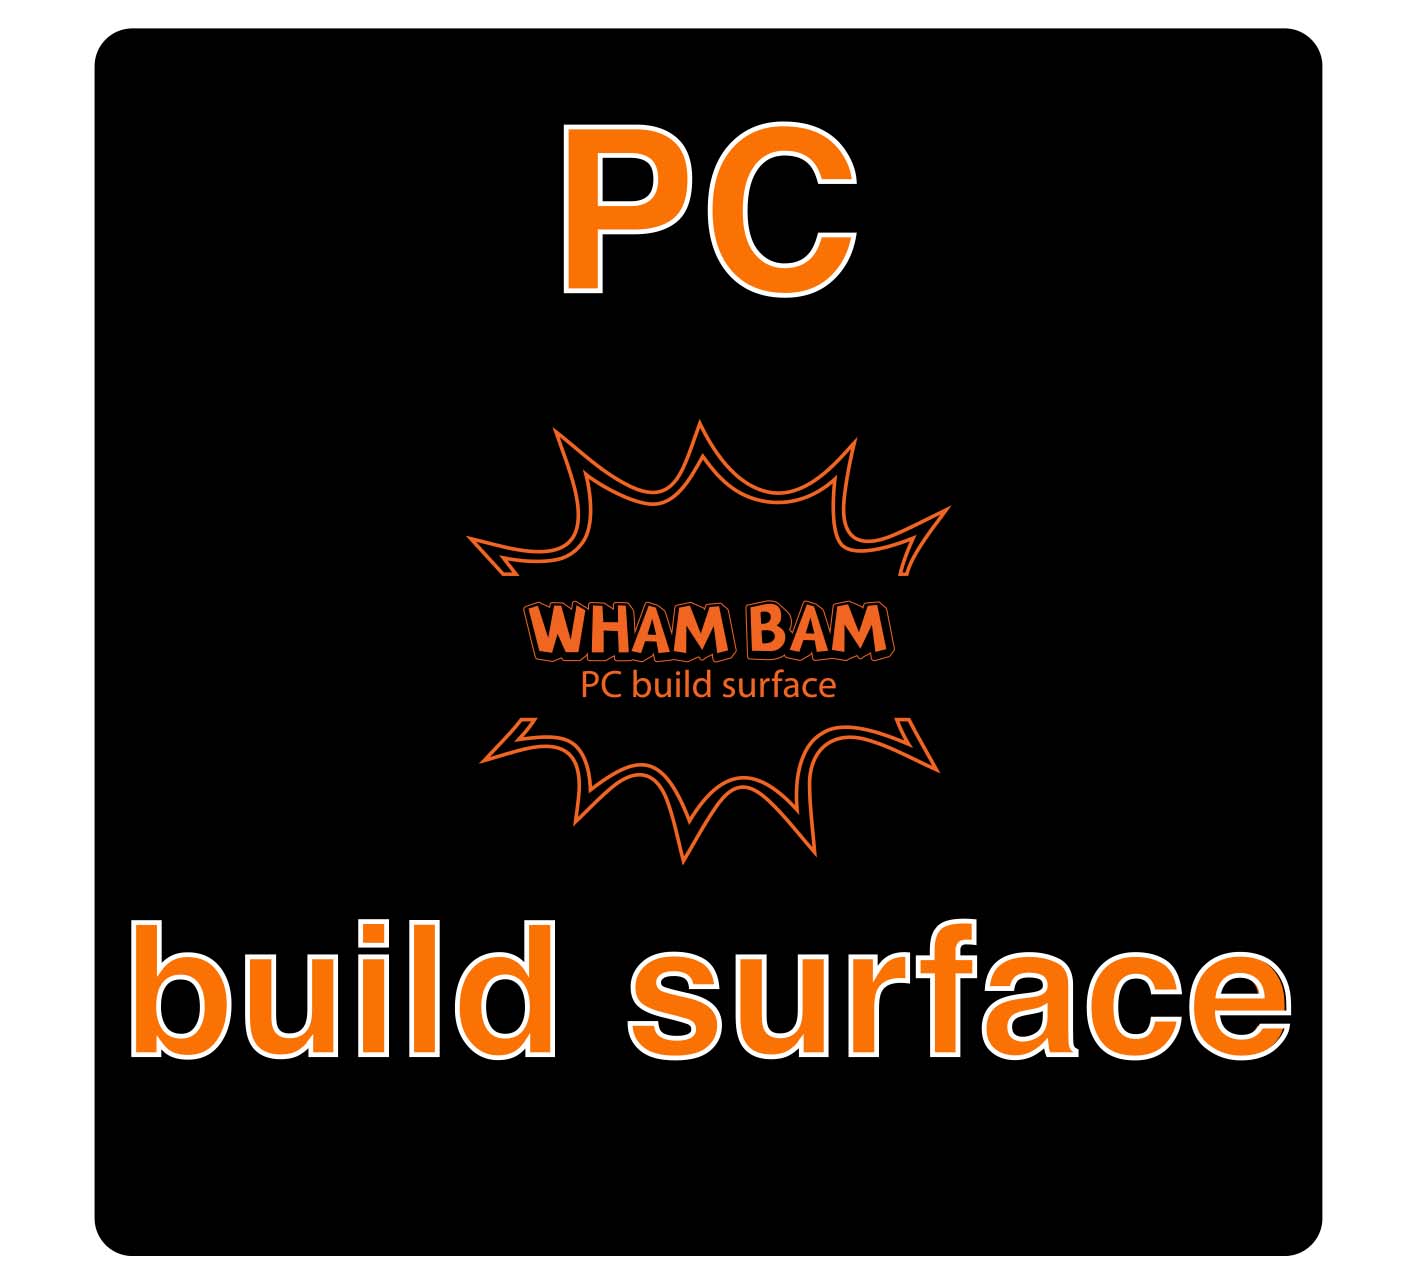 PC Build Surface (Classic Black) - 330 x 330 - Geeetech A30, TronXY X3S  X5S